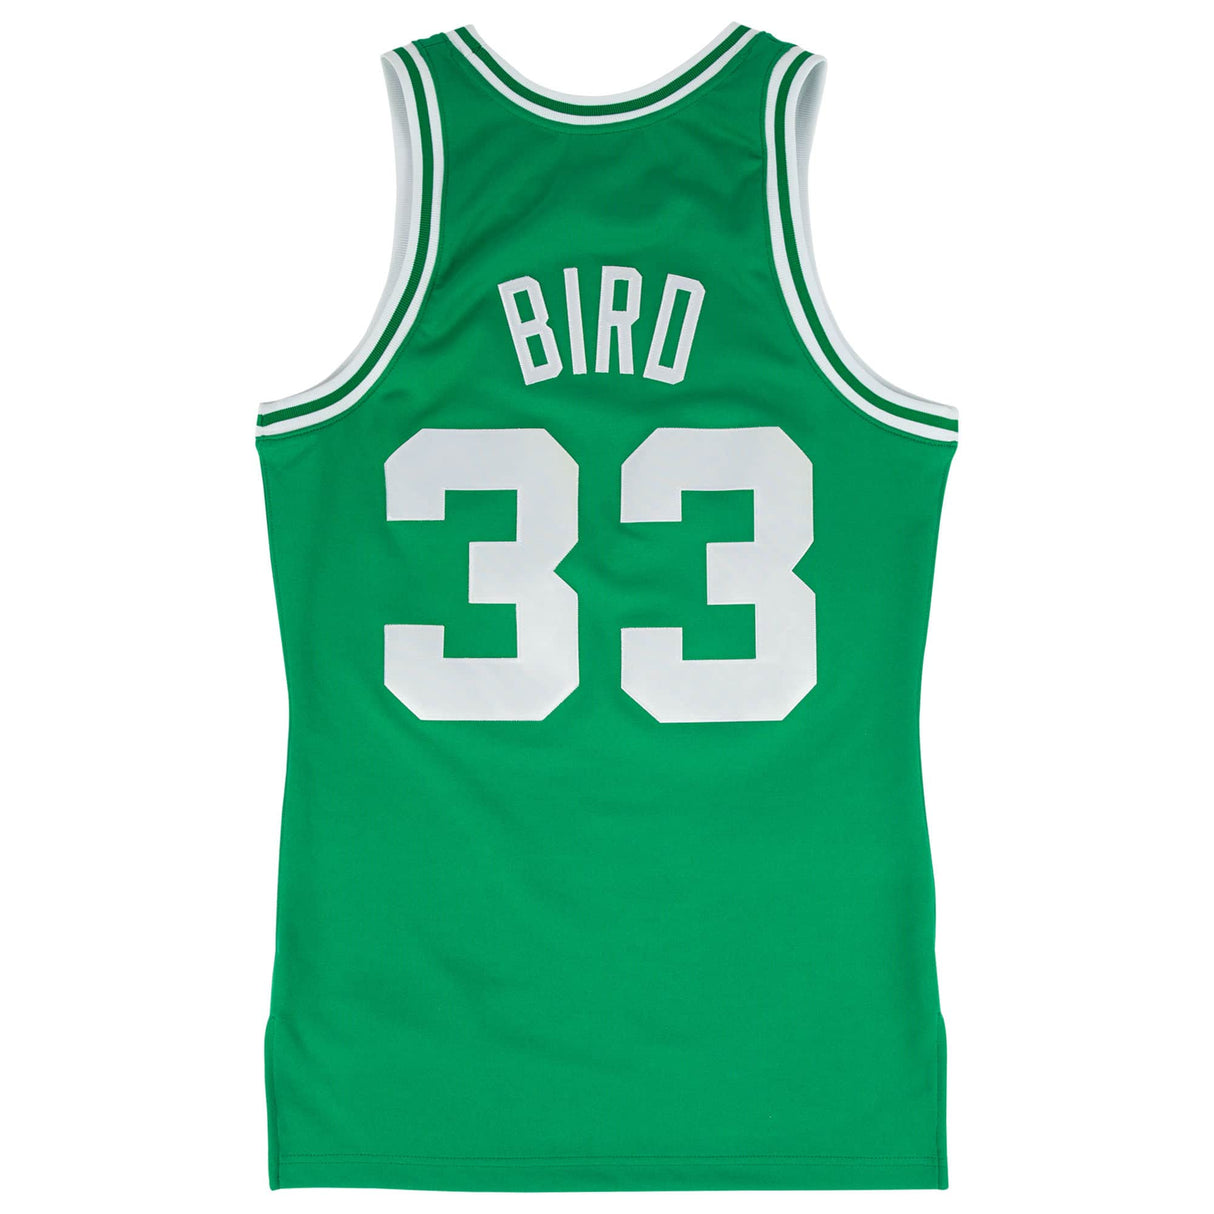 Larry Bird Boston Celtics Jersey - Jersey and Sneakers